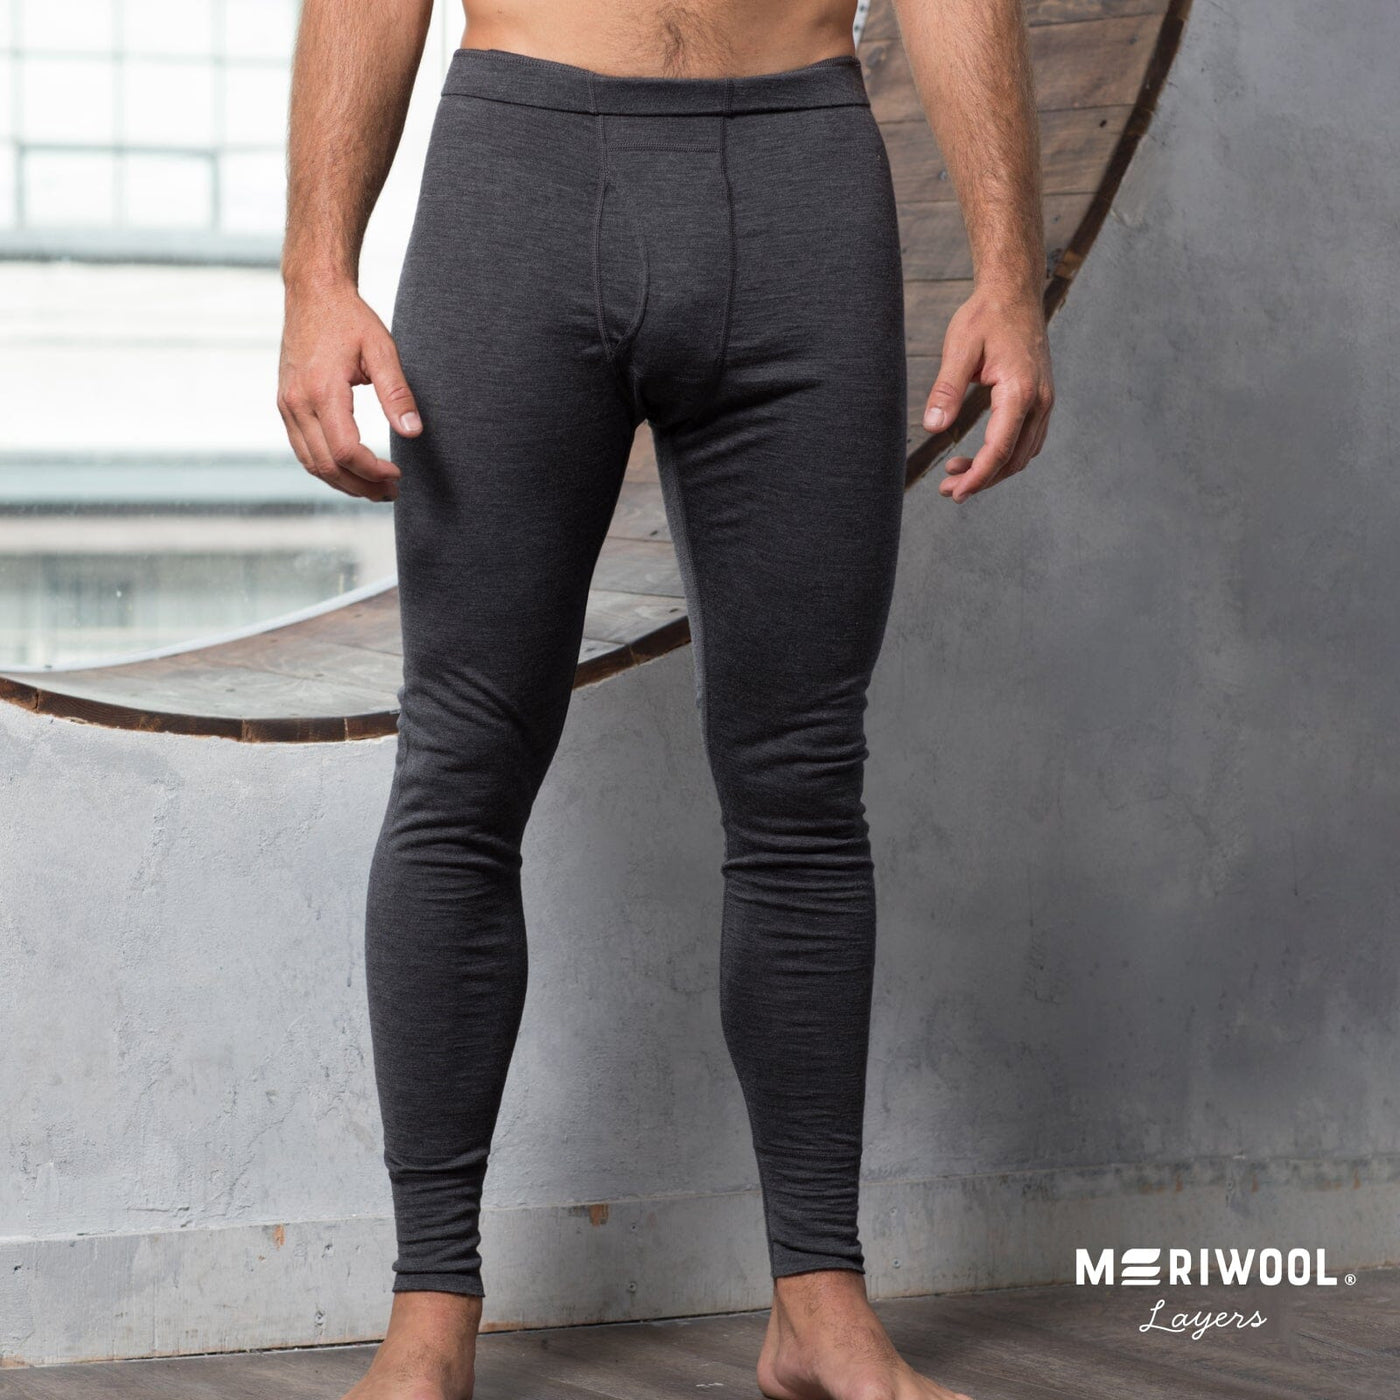 Men's Merino Wool Pants - Heavyweight Base Layer Ocean Blue, Bottom, Underwear, Thermal